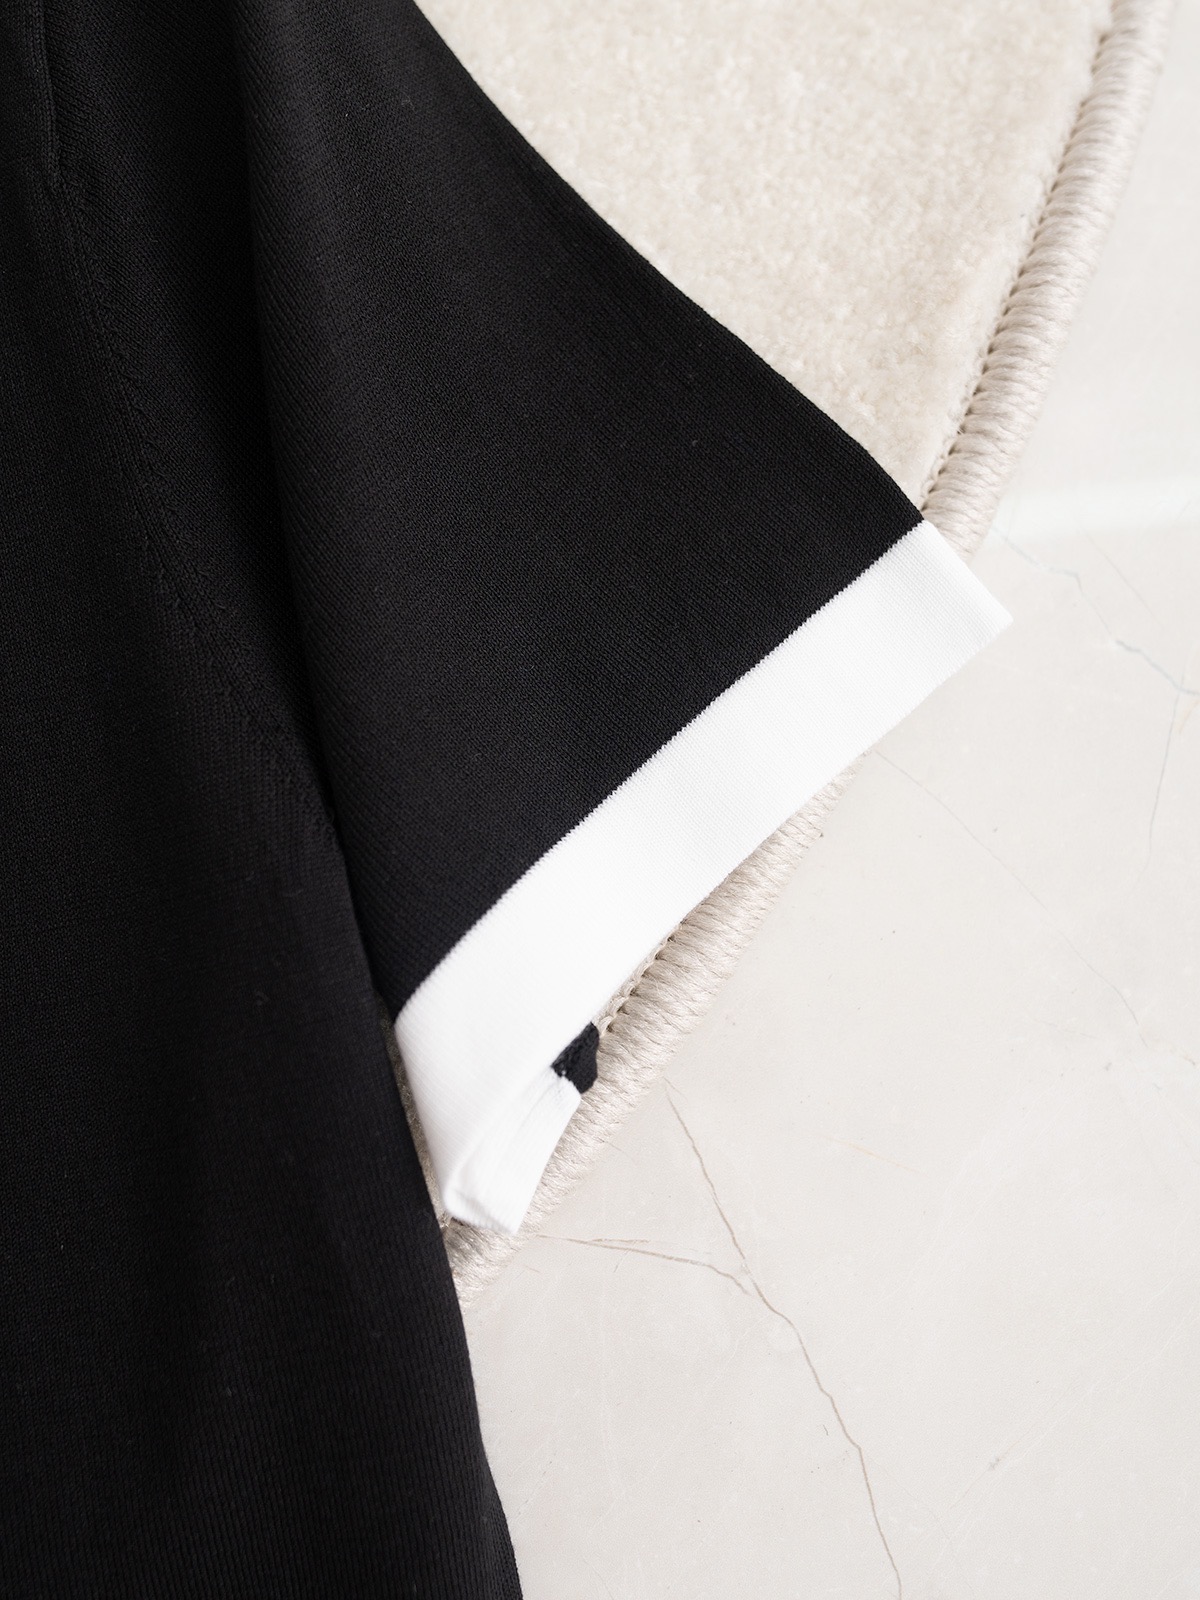 courrege古经典系列16针织机22针缝盘单边织法领口袖口撞色设计收腰版型原版1:1制作绢丝混纺纱线